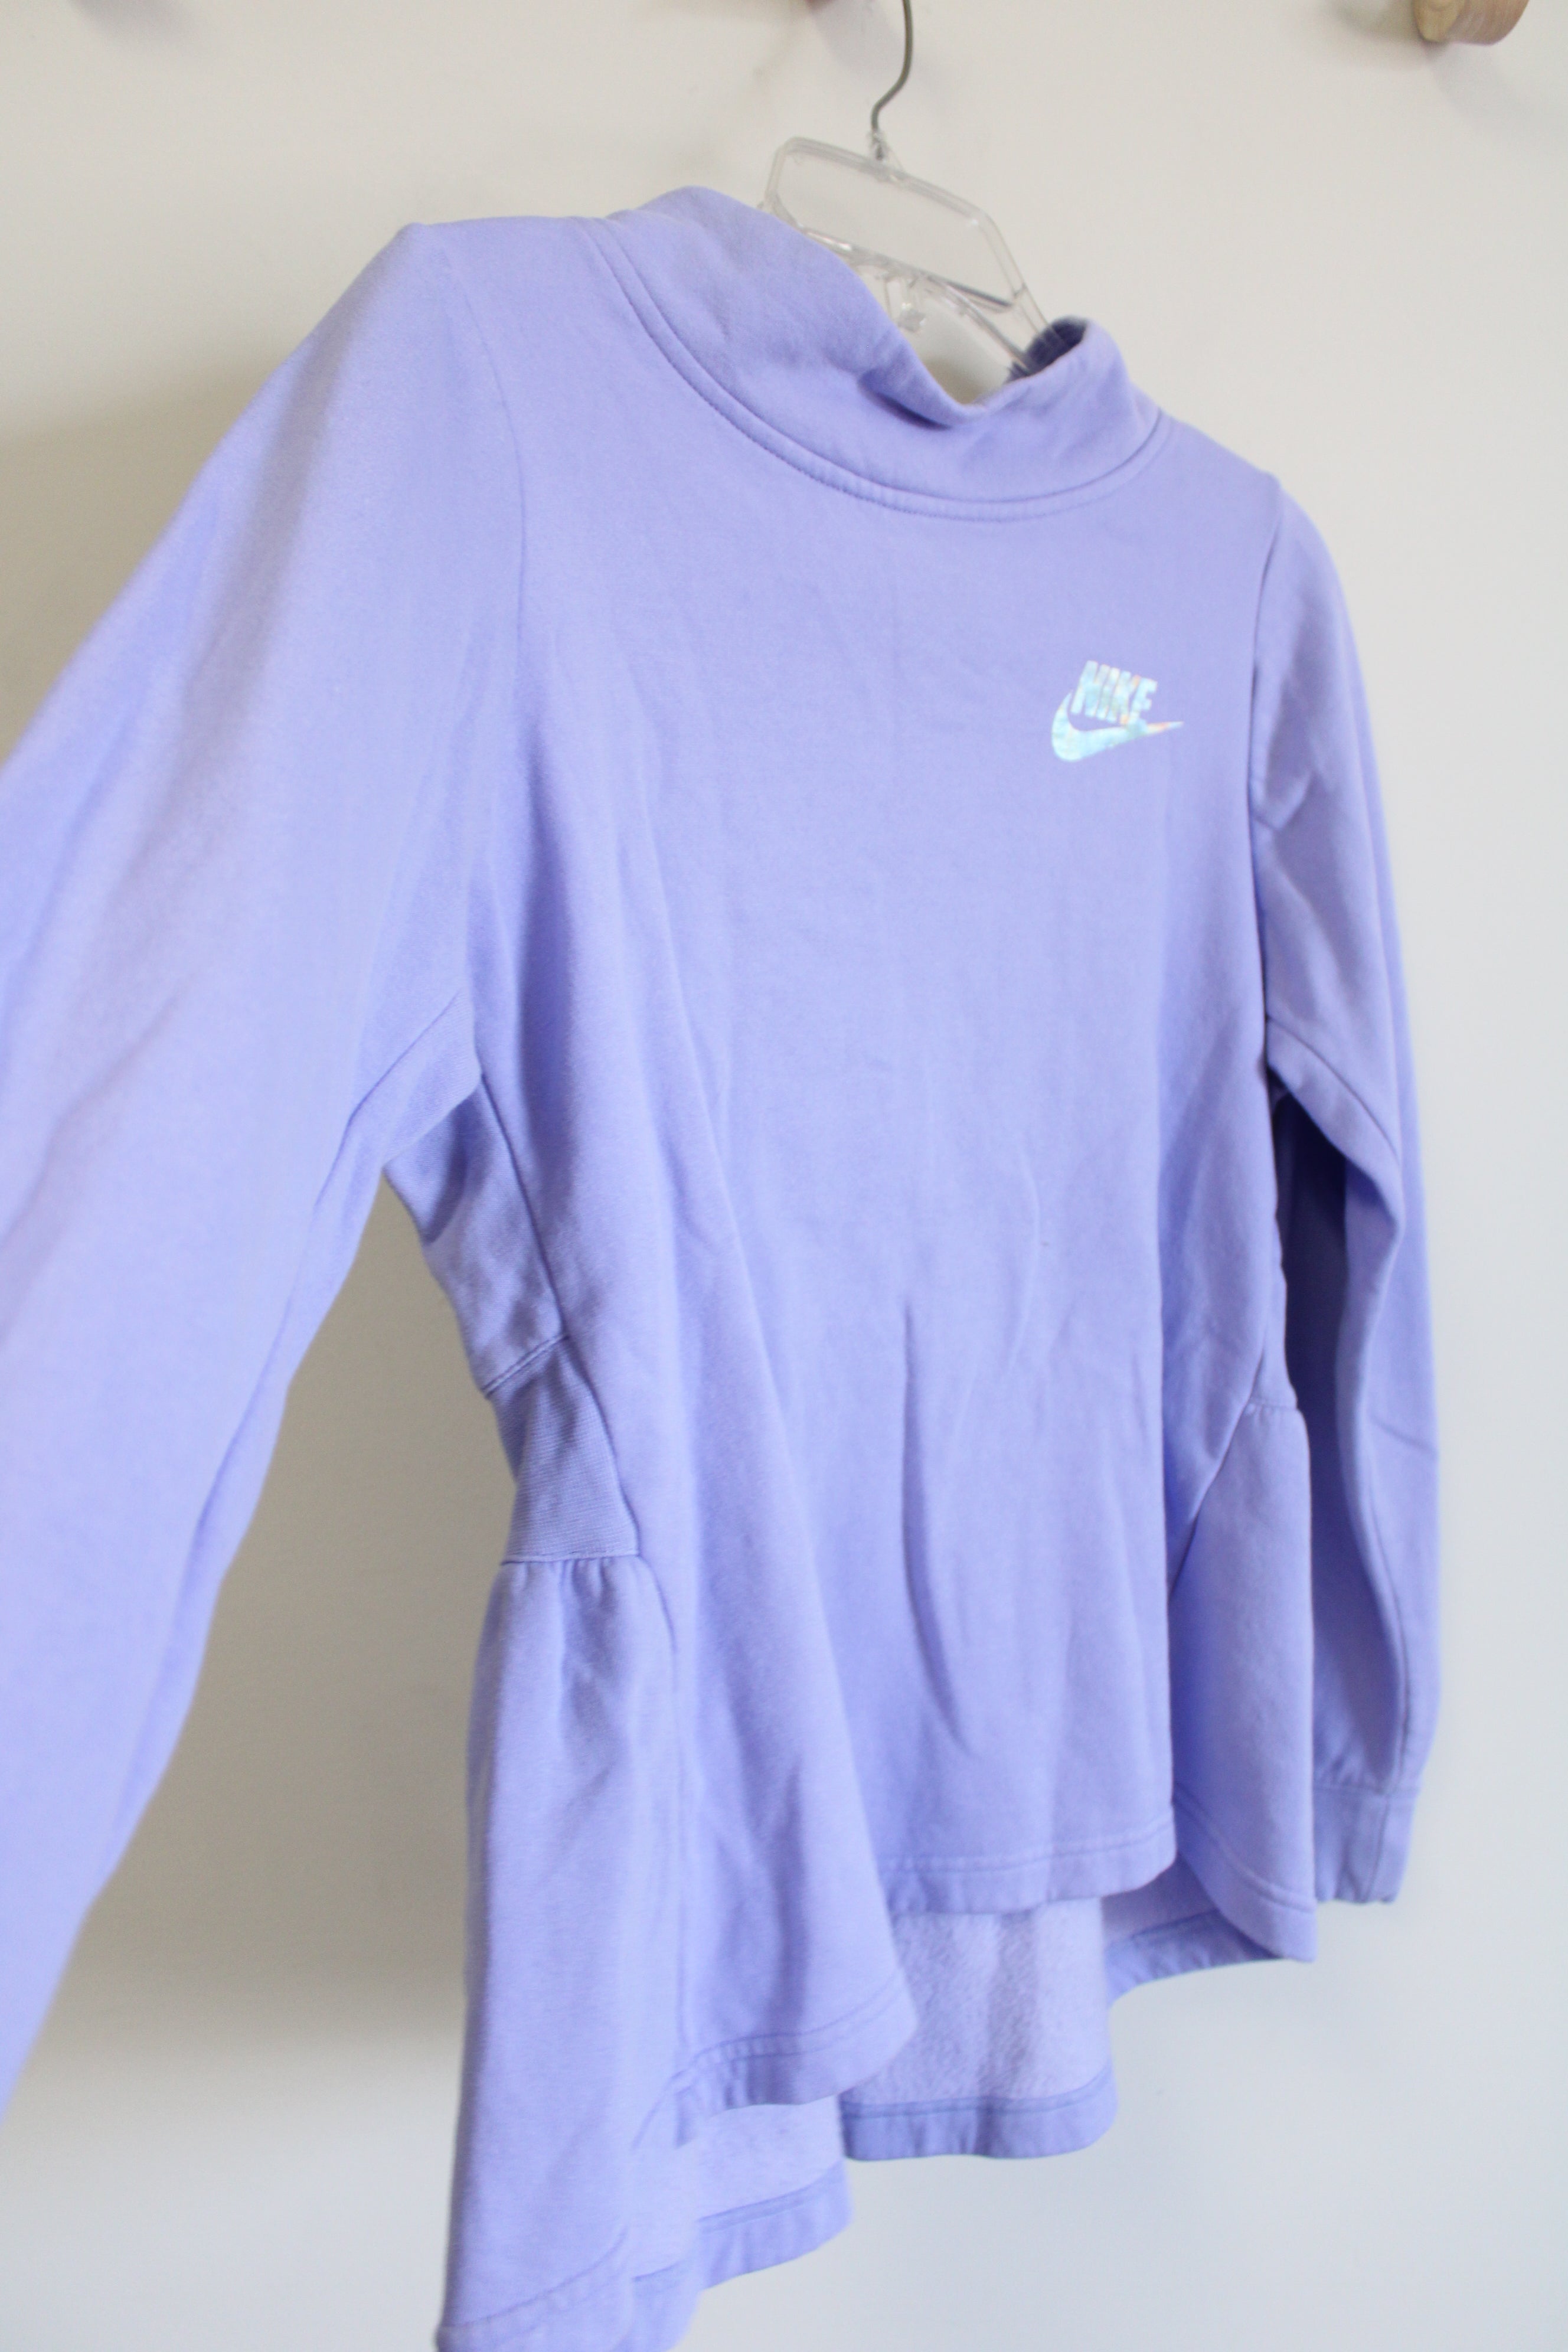 Nike Purple Sweatshirt | XL (18/20)